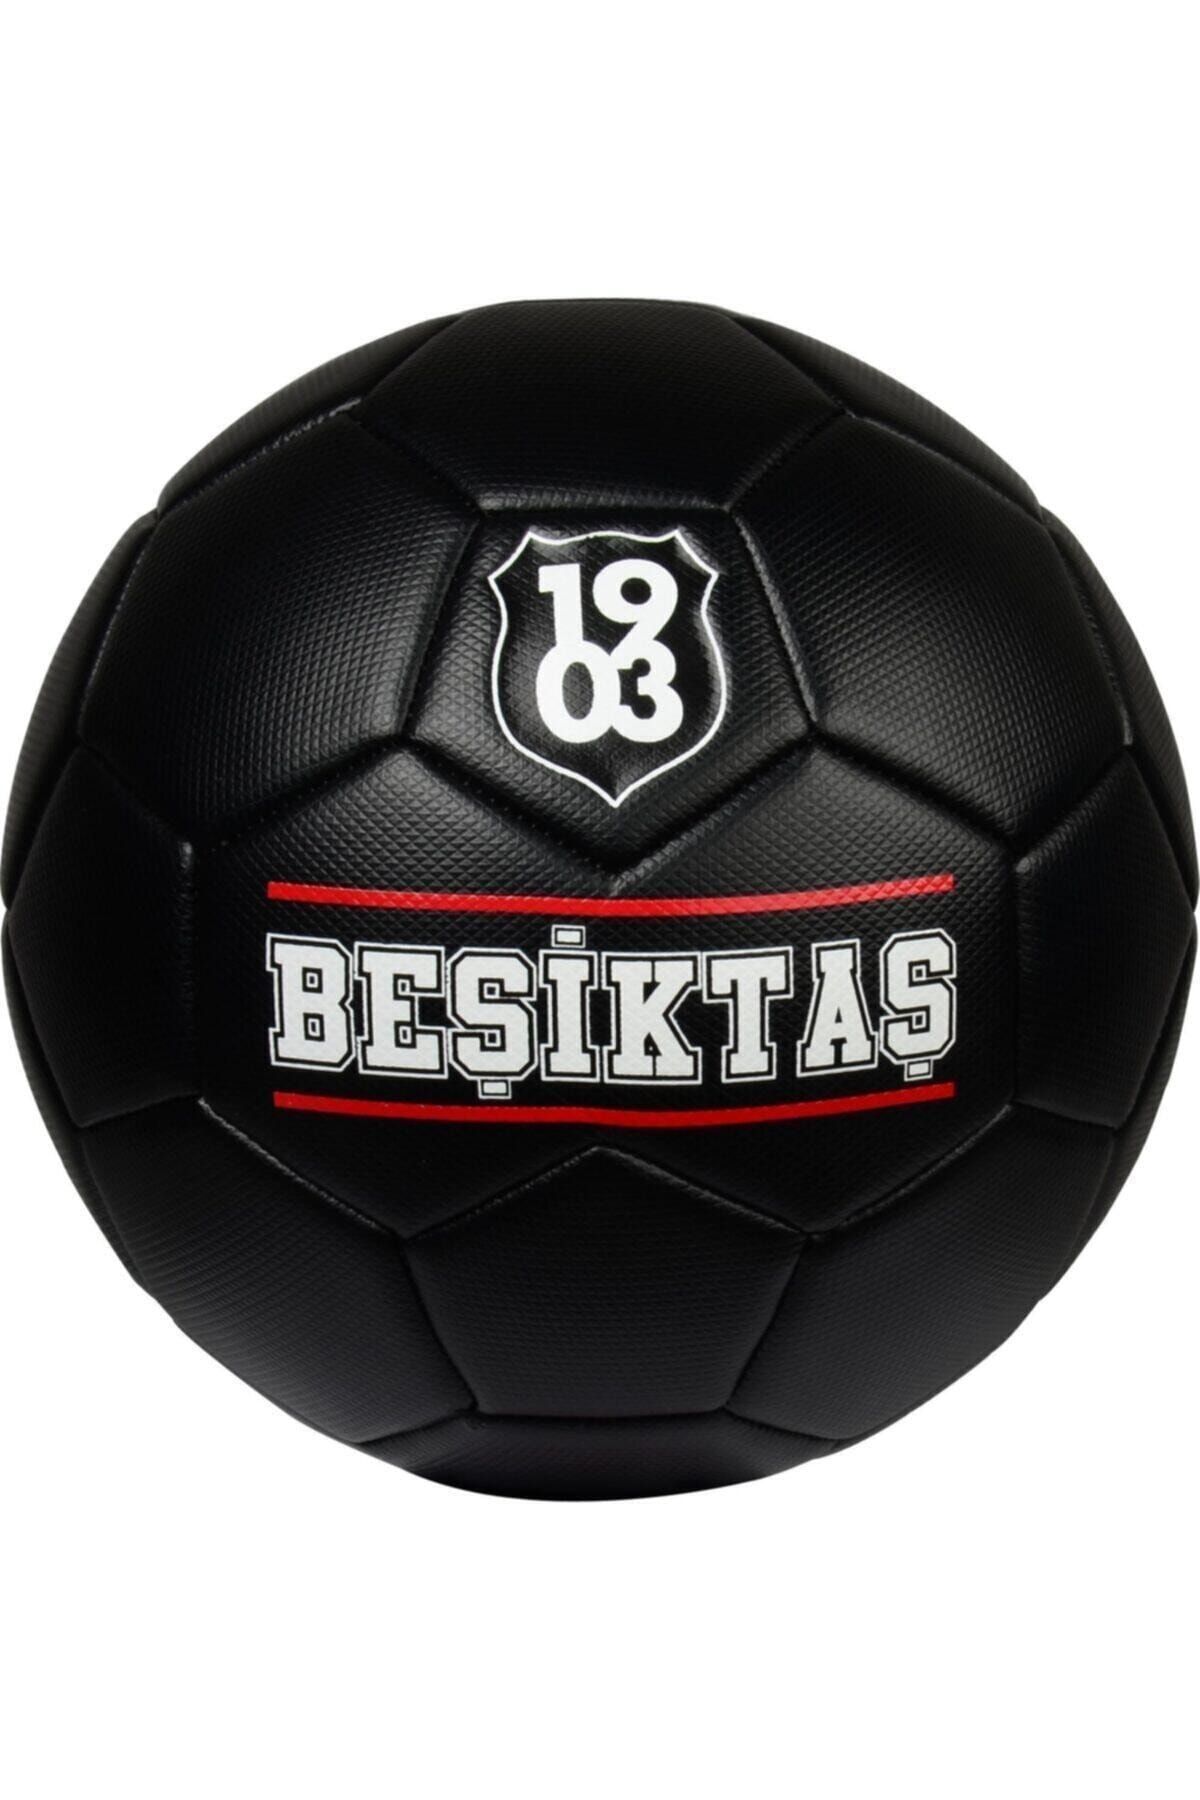 Beşiktaş Lisanslı Futbol Topu Taraftar Futbol Topu No 5